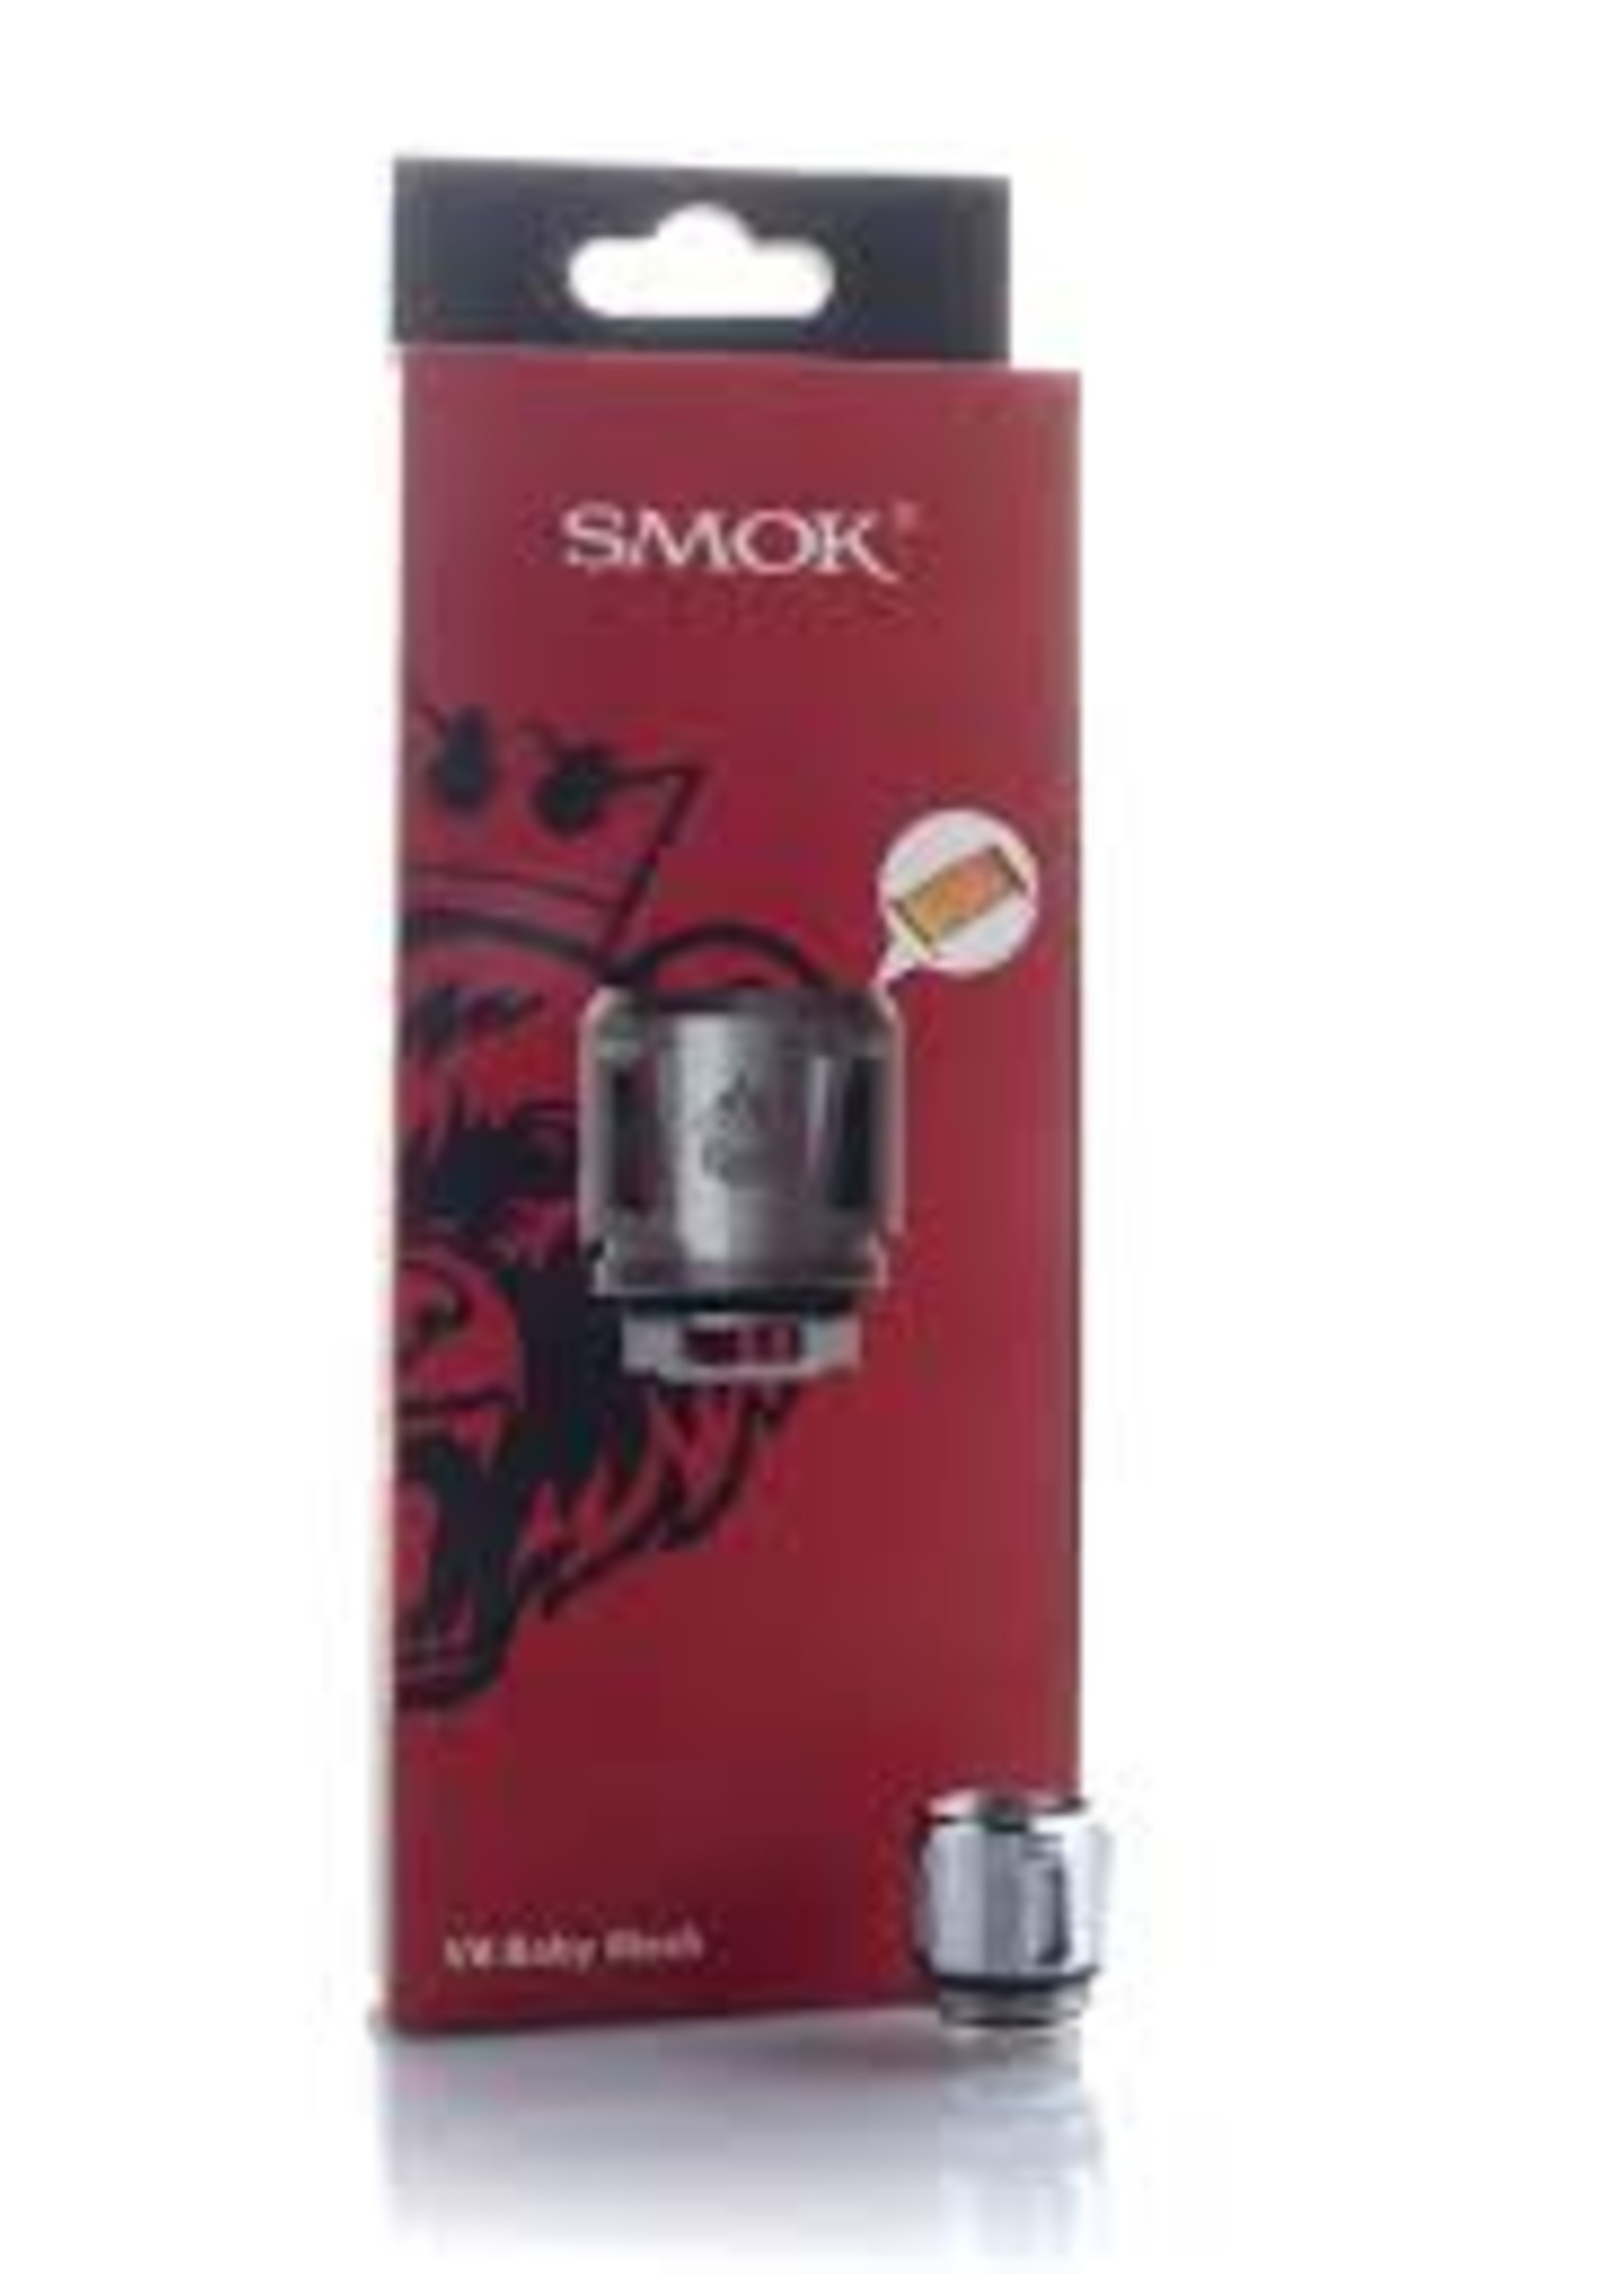 Smok SMOK V8 Baby Mesh .15 (V8-Mesh) - SINGLE